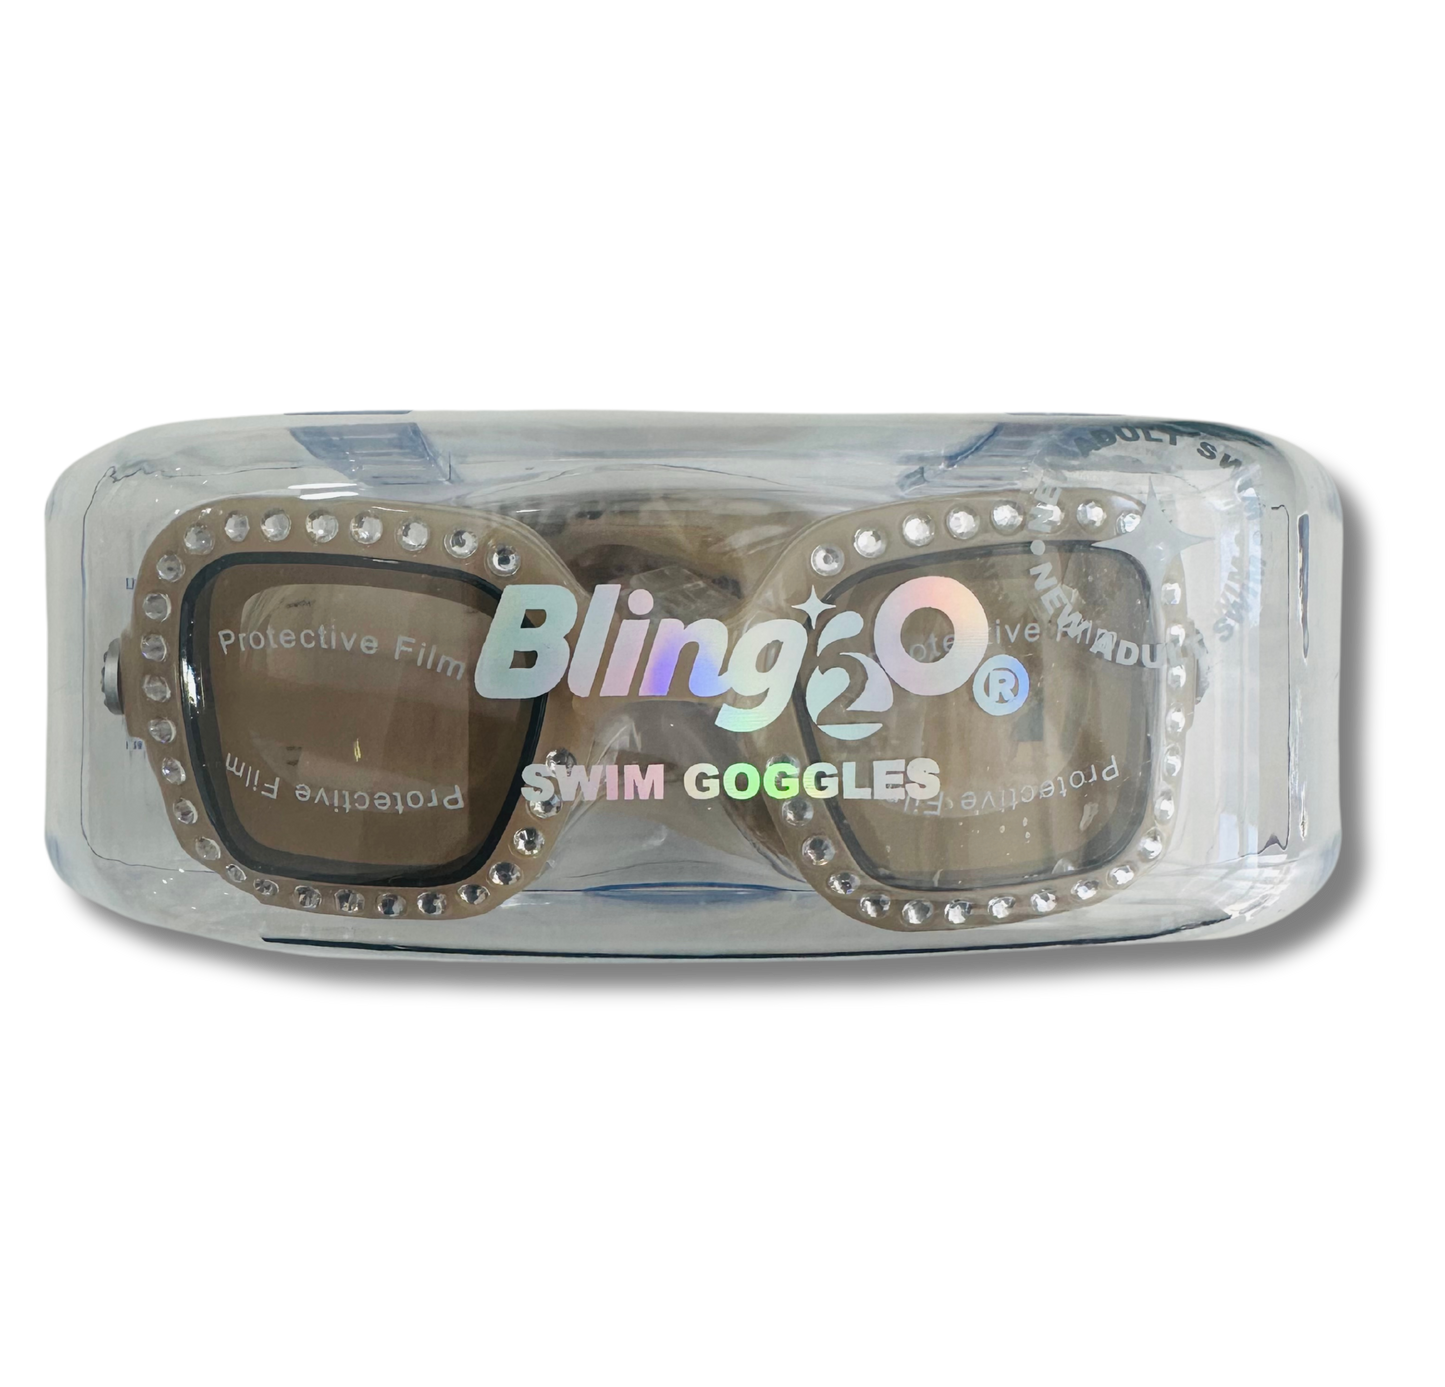 Bling2o Opal Vibrancy, Anti Fog, No Leak, Non Slip and UV Protection Kids Swim Goggles